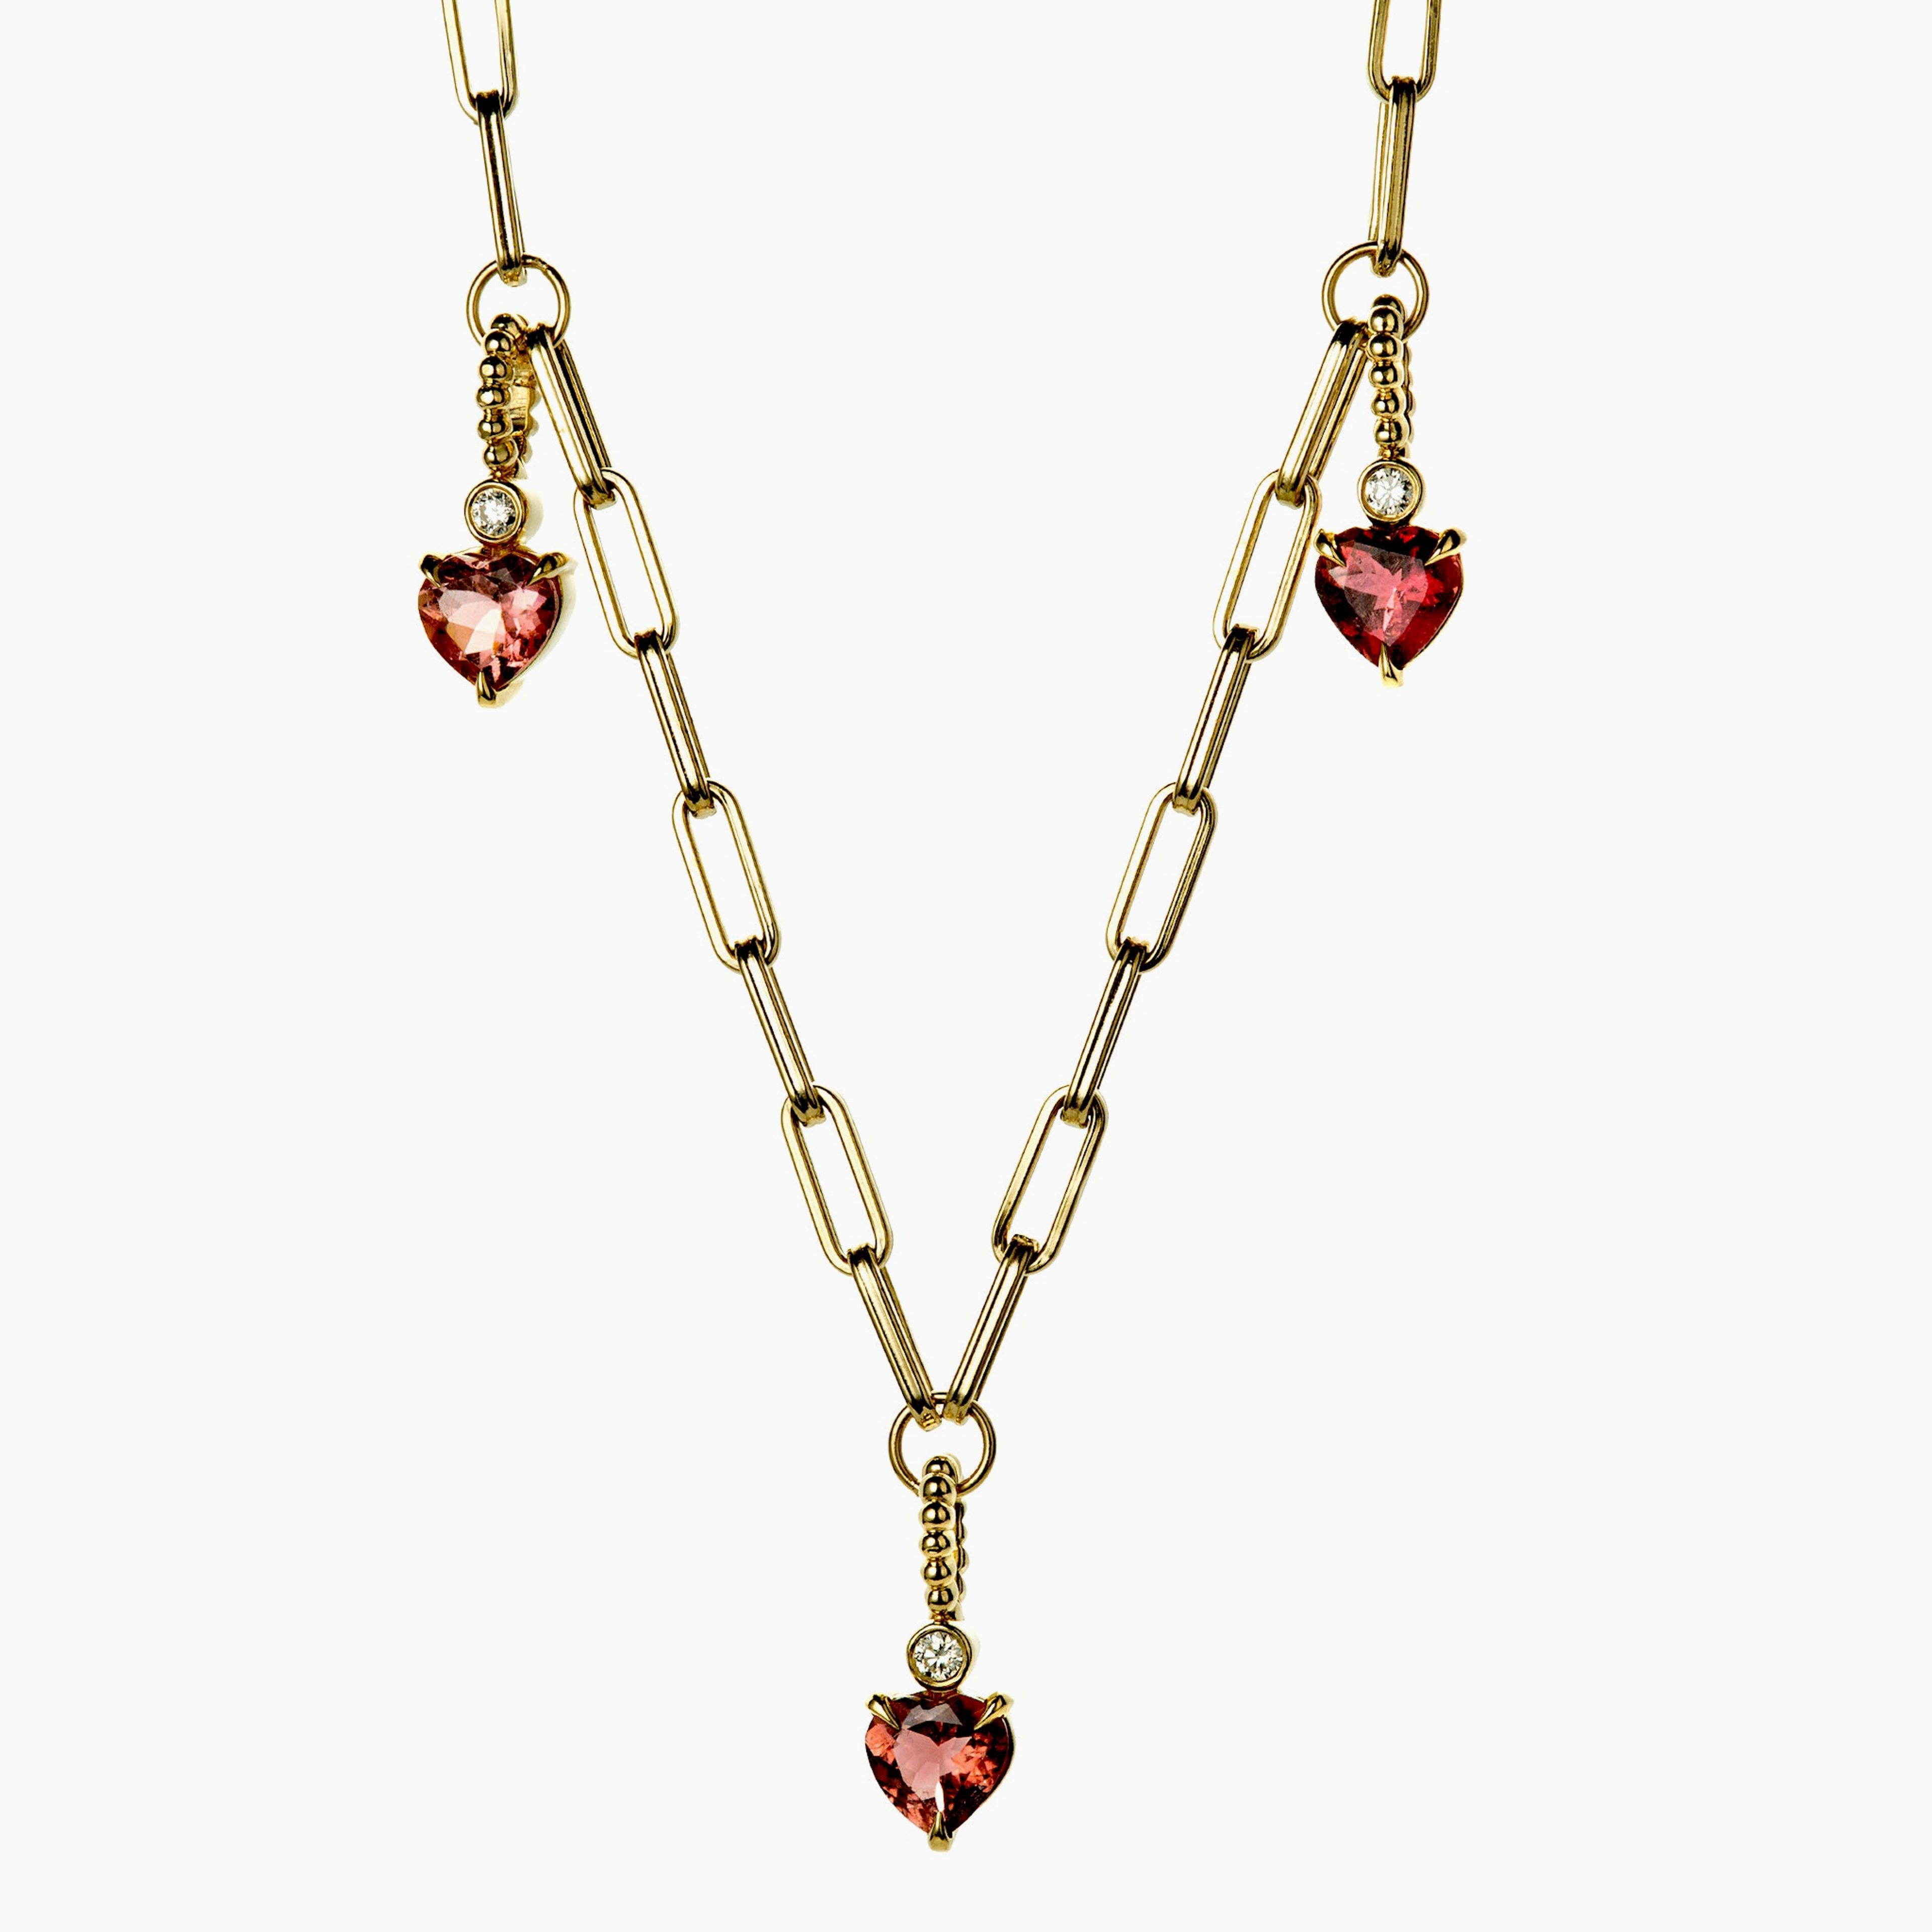 Three of Hearts charm necklace